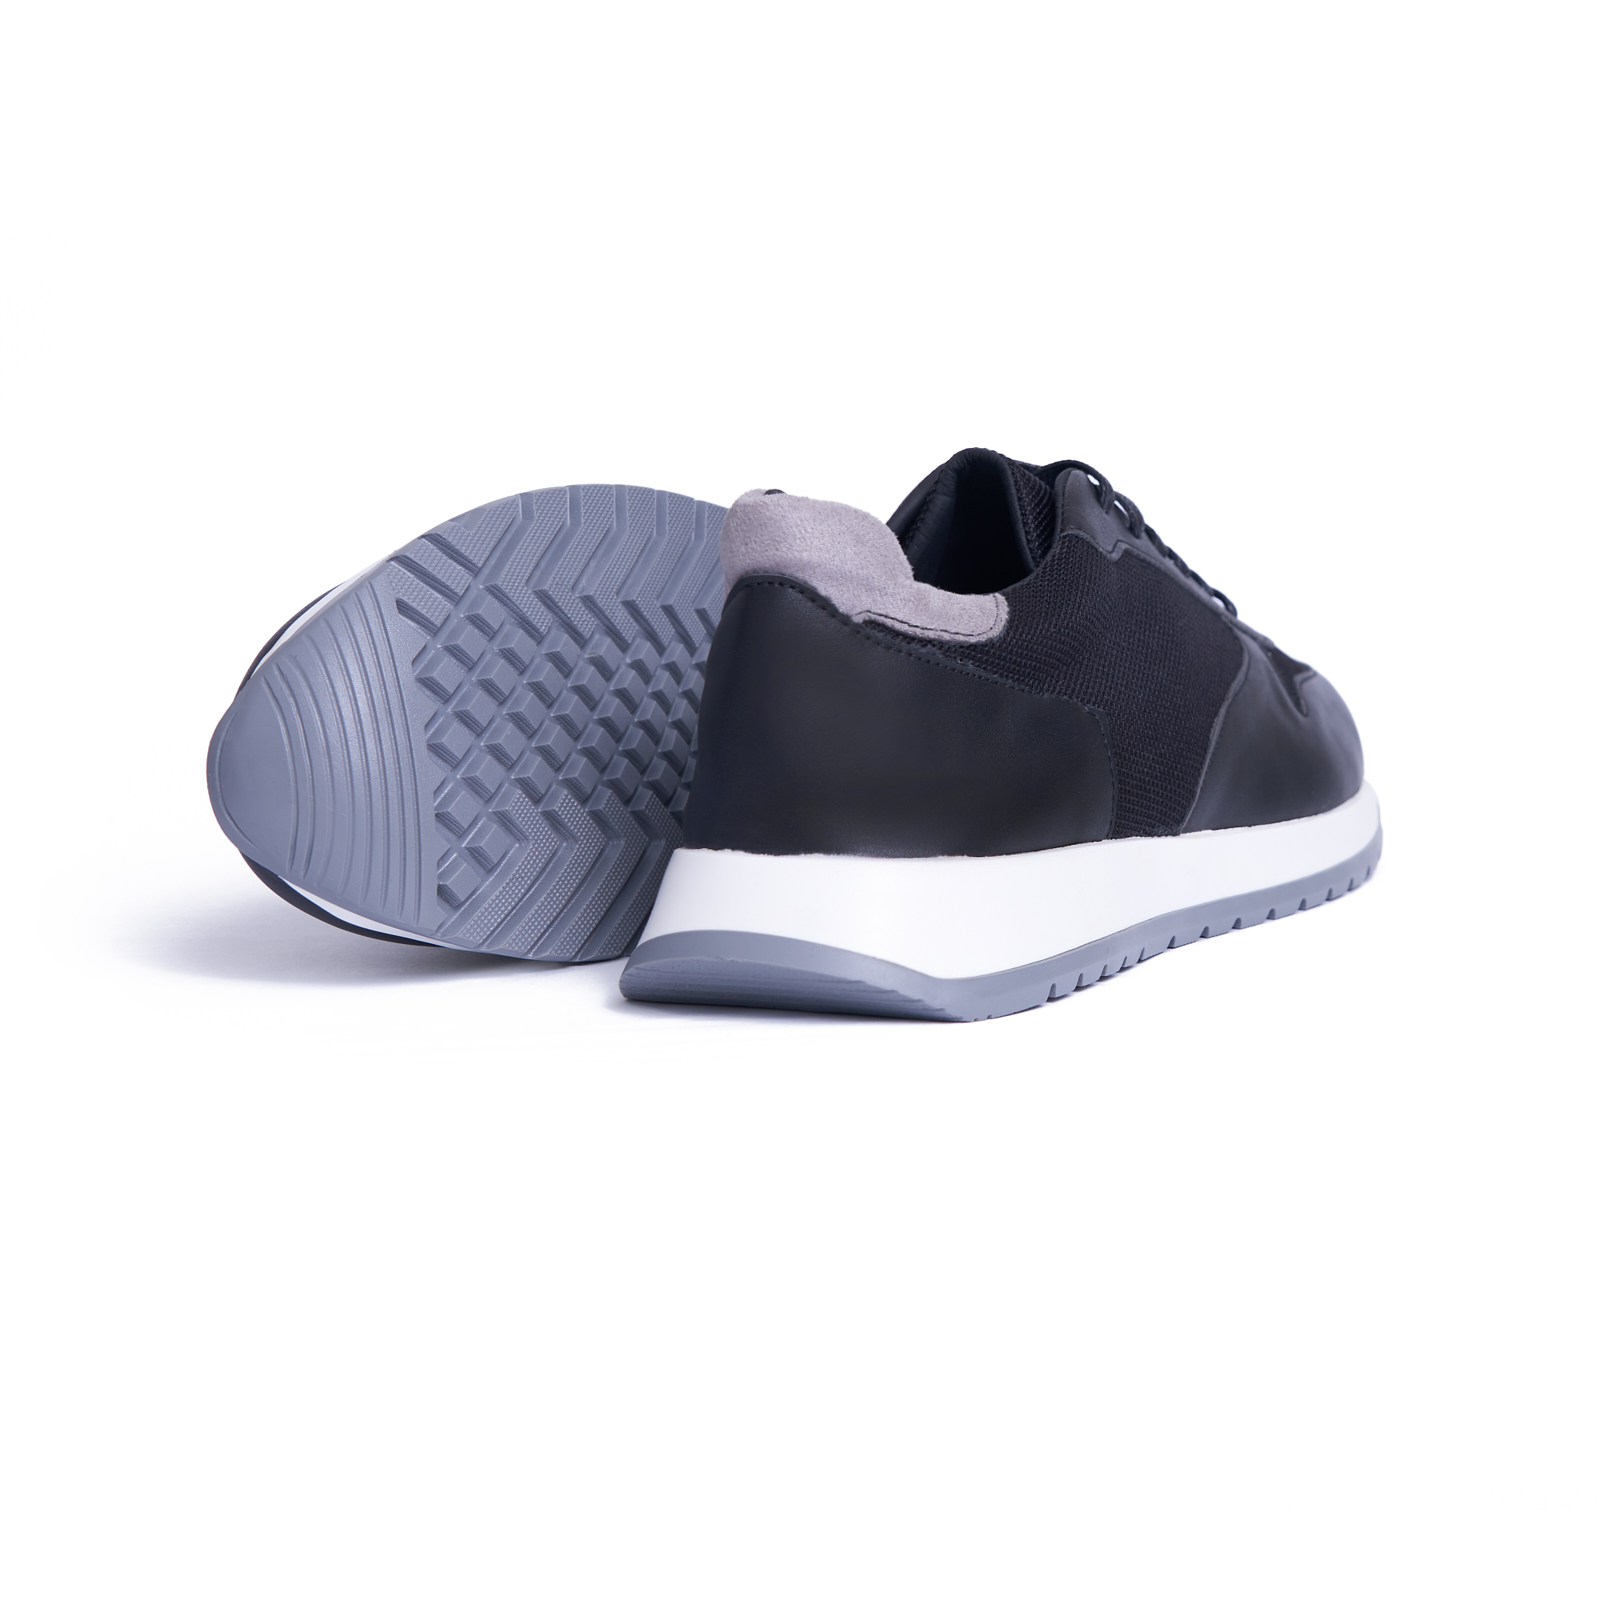 Men's Fashion Sneaker - Black Color | Model R8 | Koka Store Exclusive